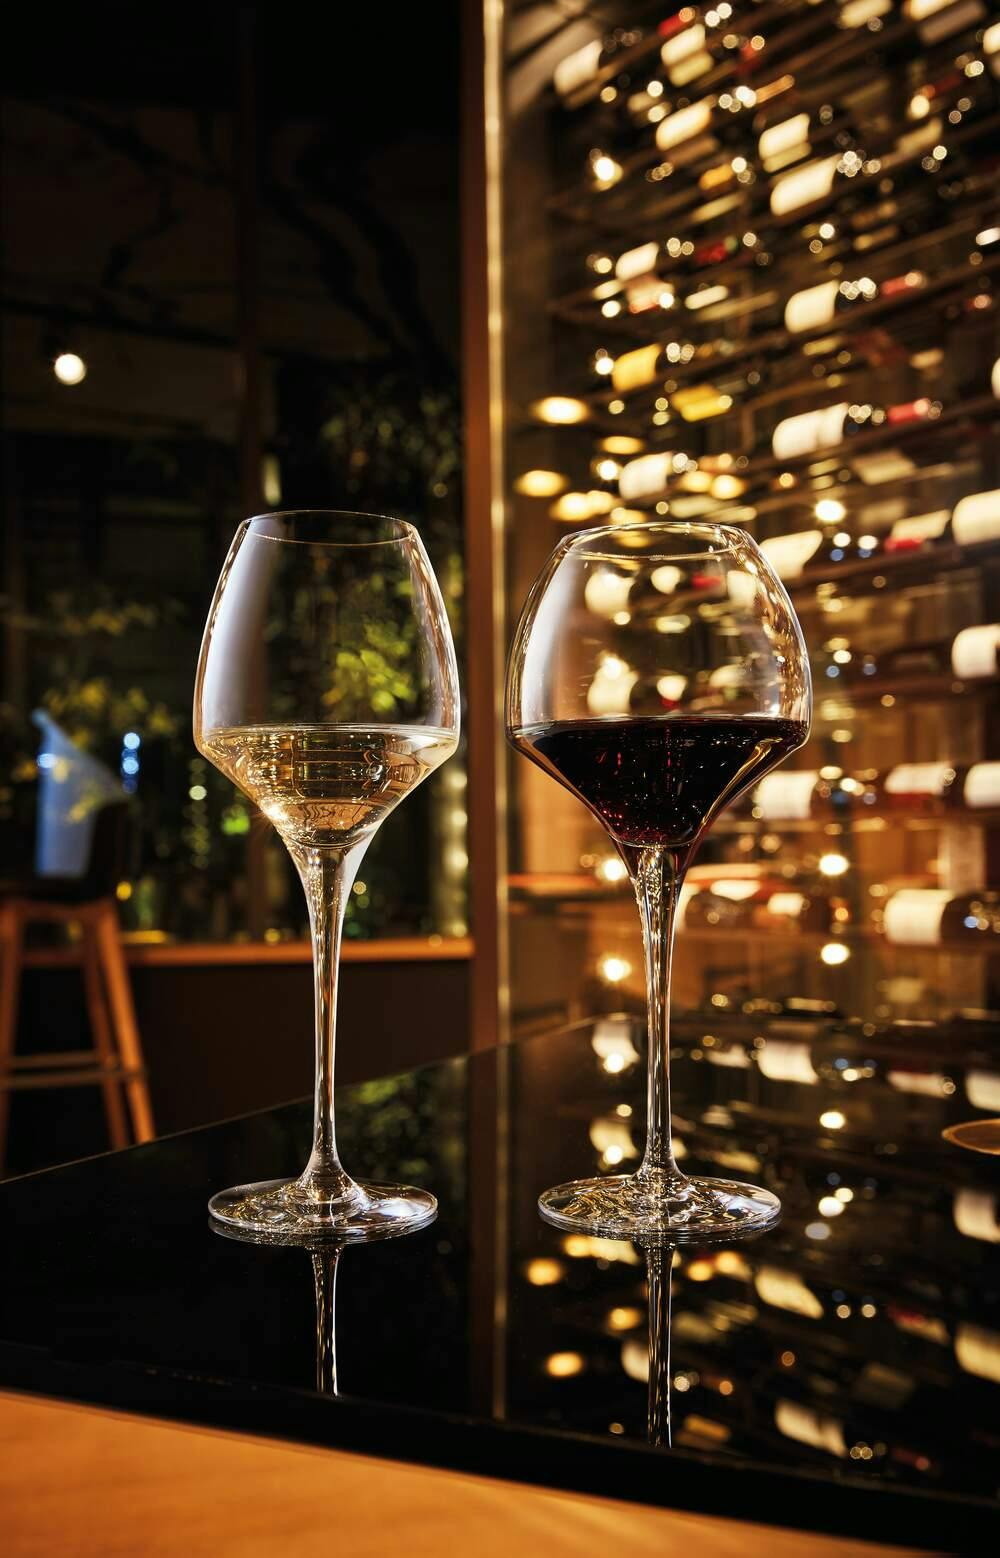 Chef & Sommelier Open Up Vit vin Universal Tasting glas 40 cl. 6-pack